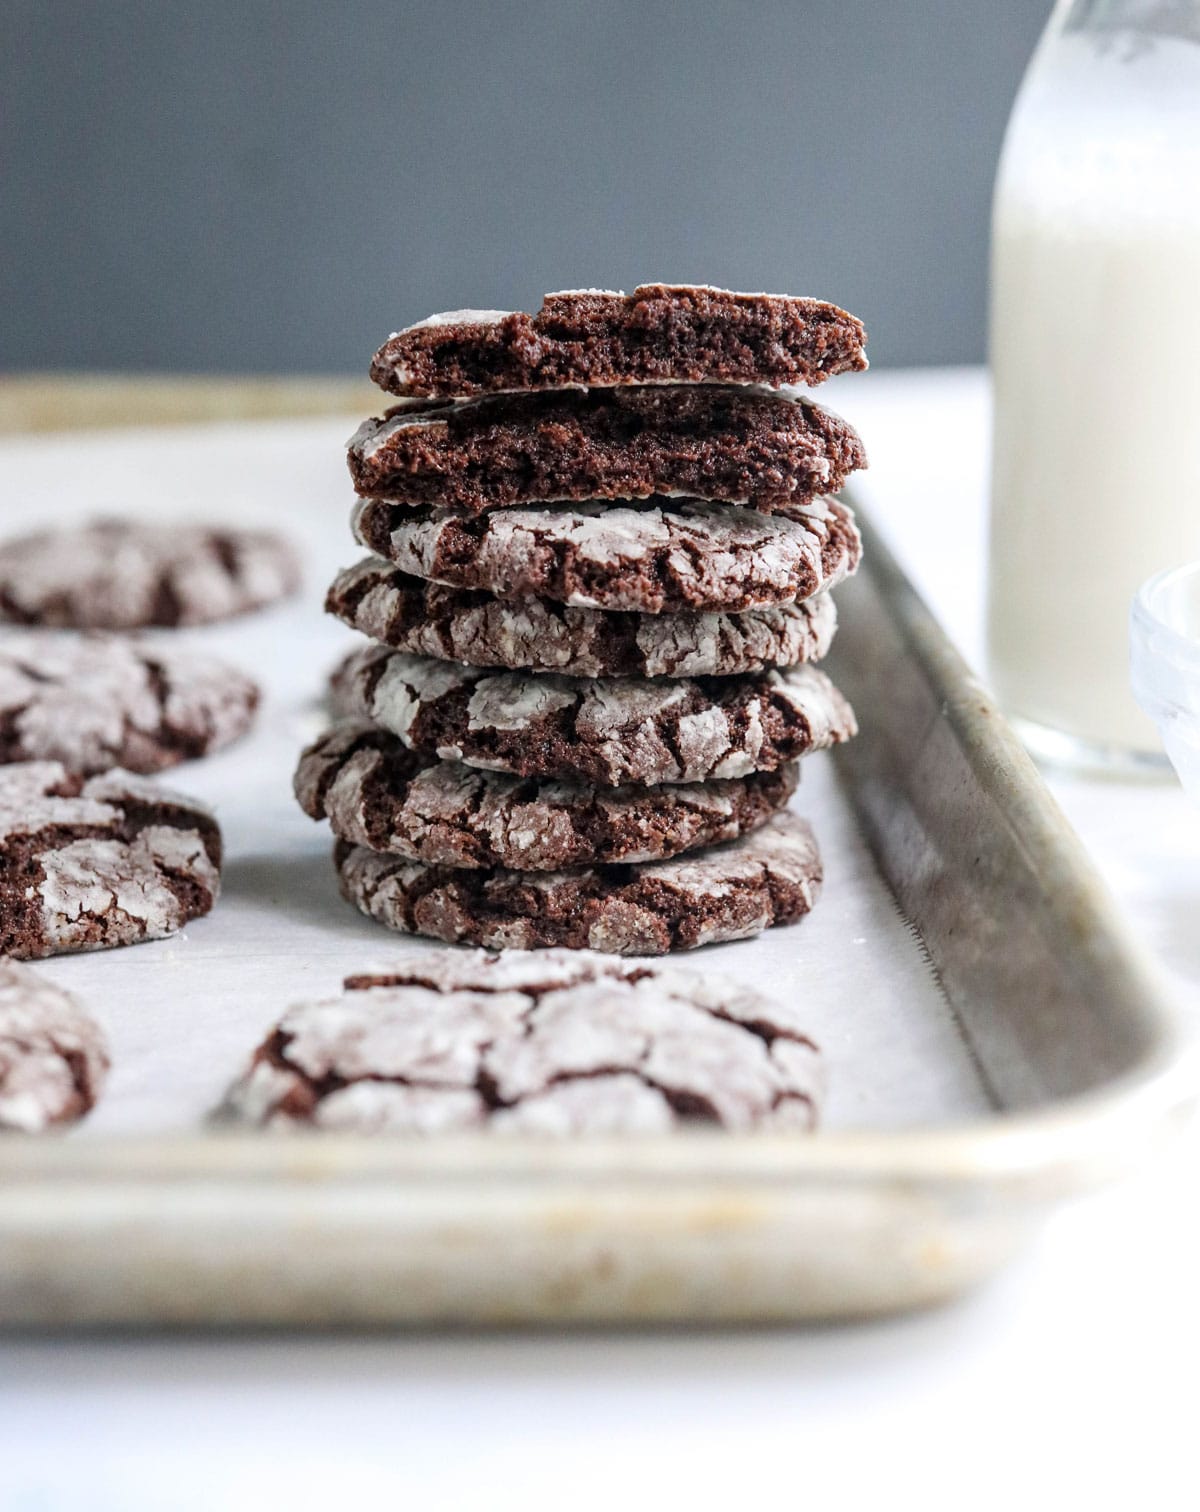 chocolate crinkle cookies stacked on pan